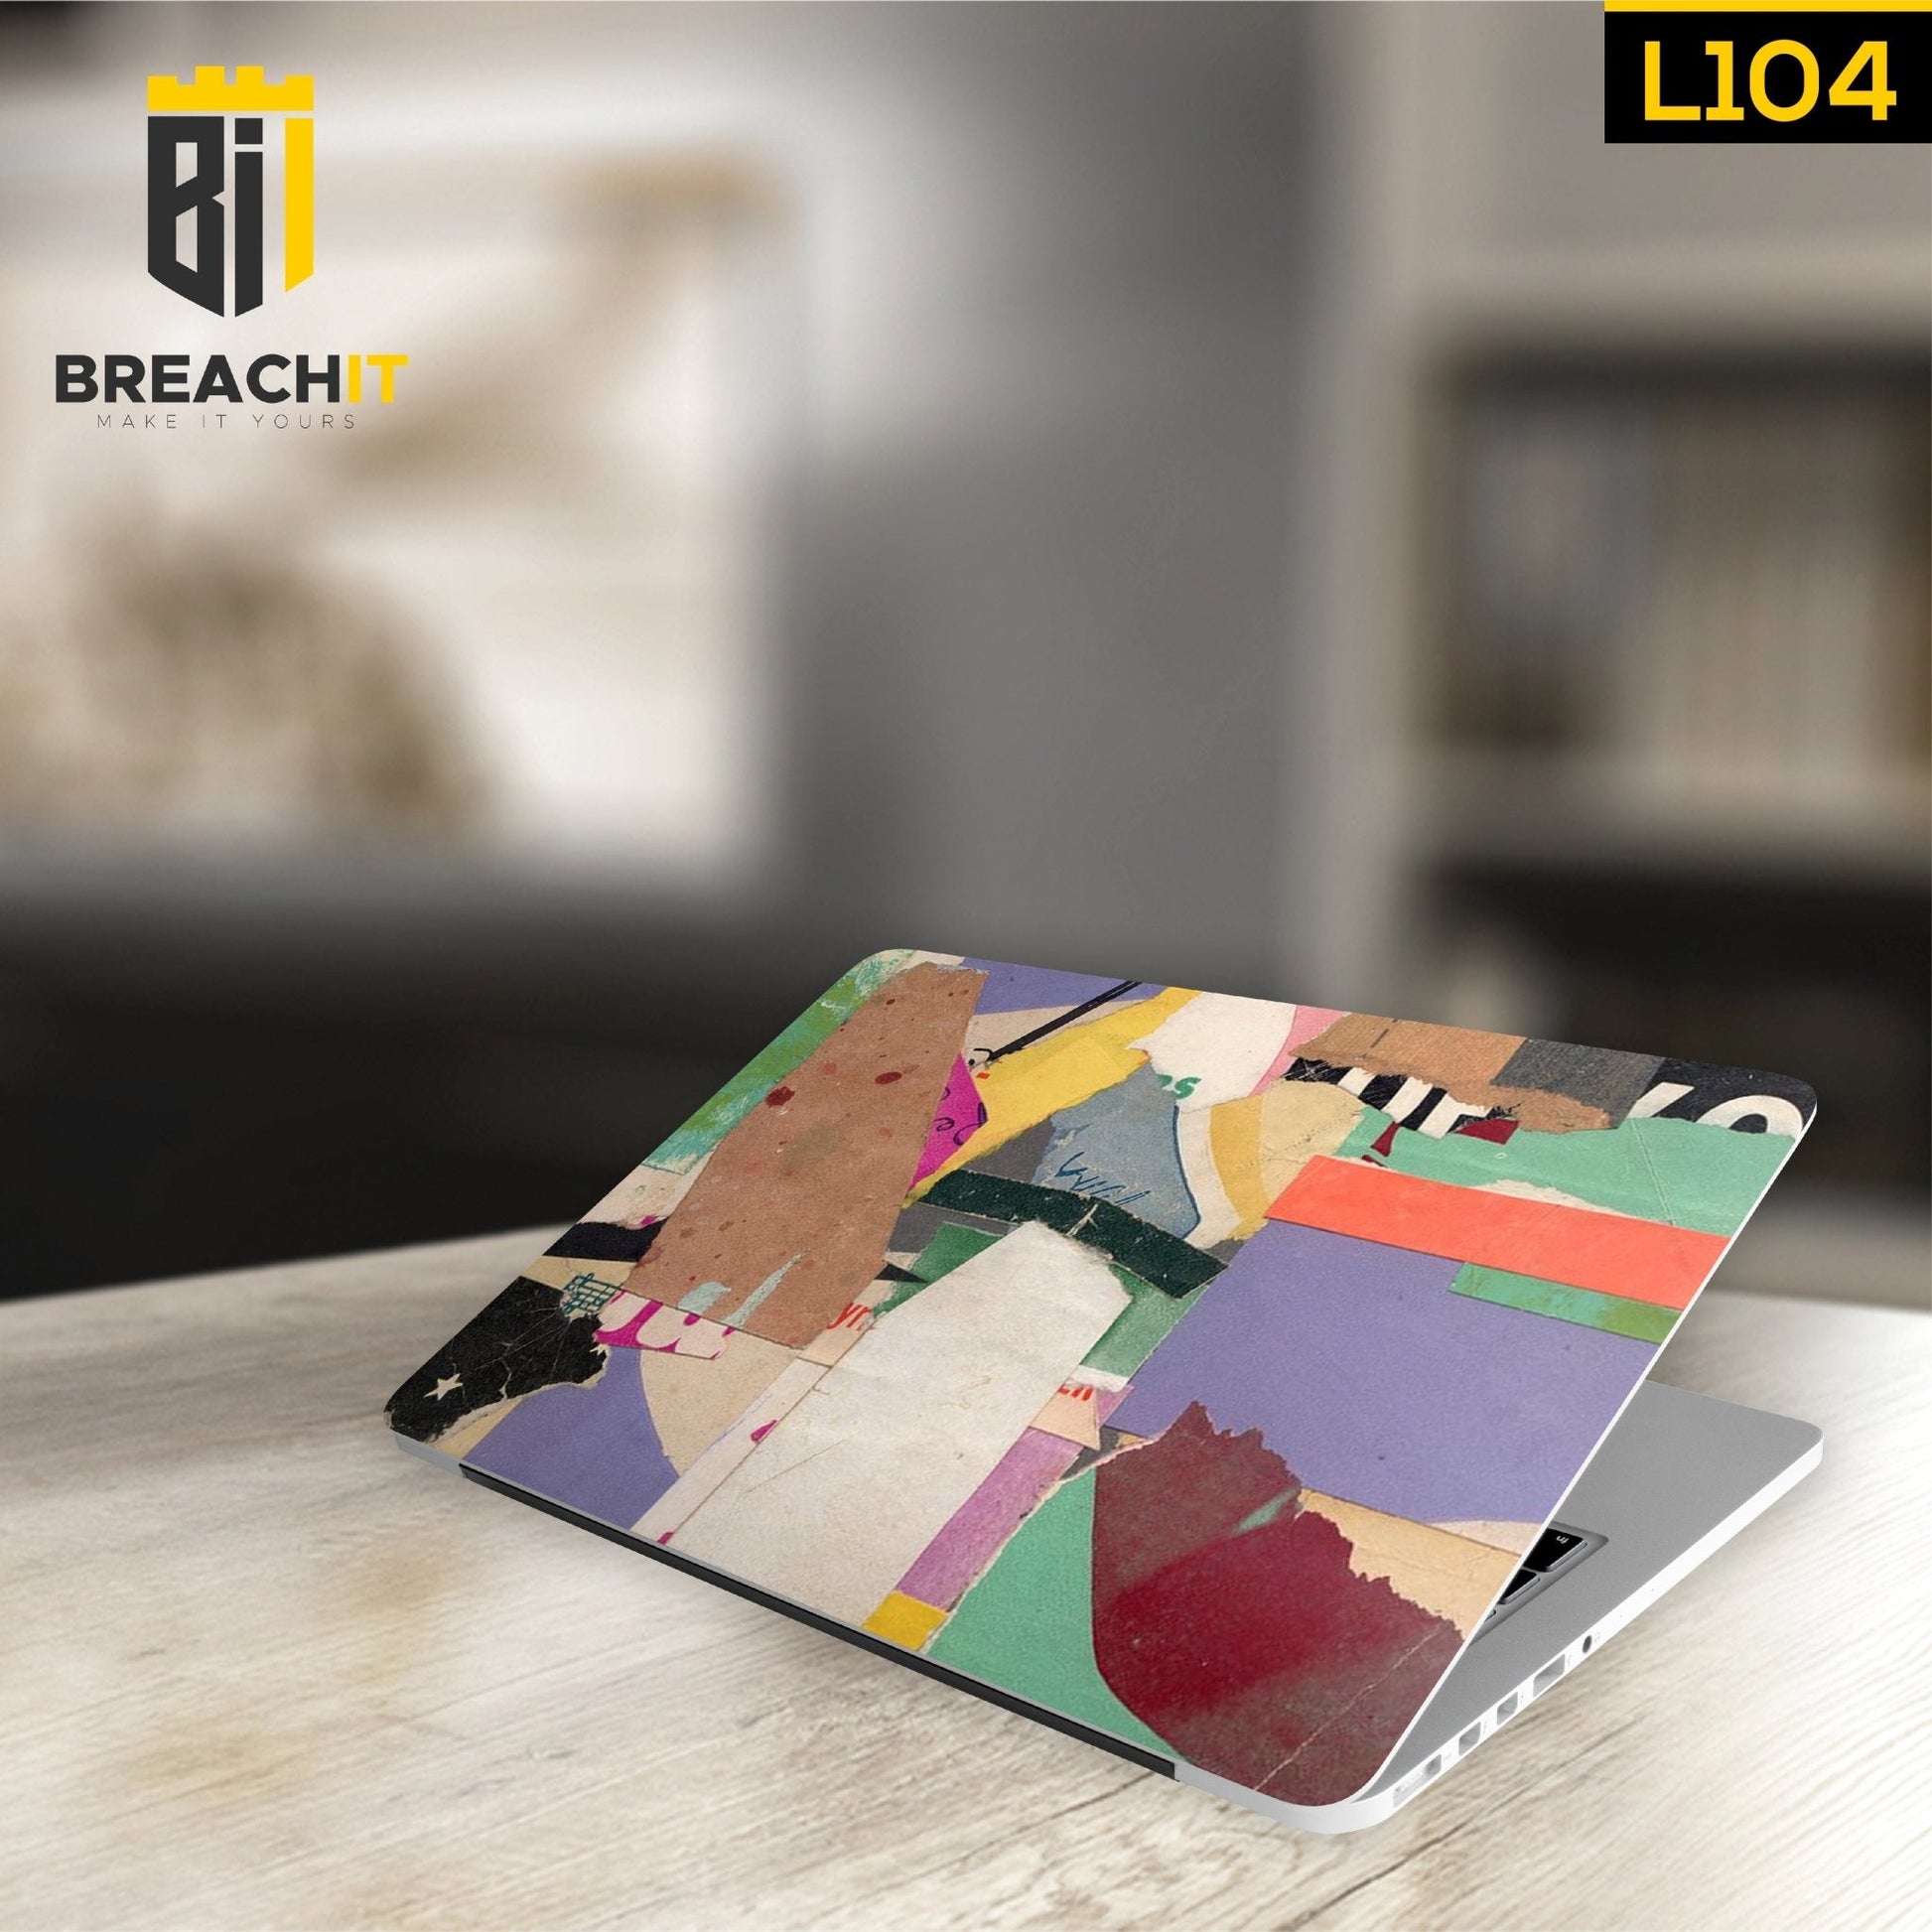 L104 Colorful Aesthetic Laptop Skin - BREACHIT